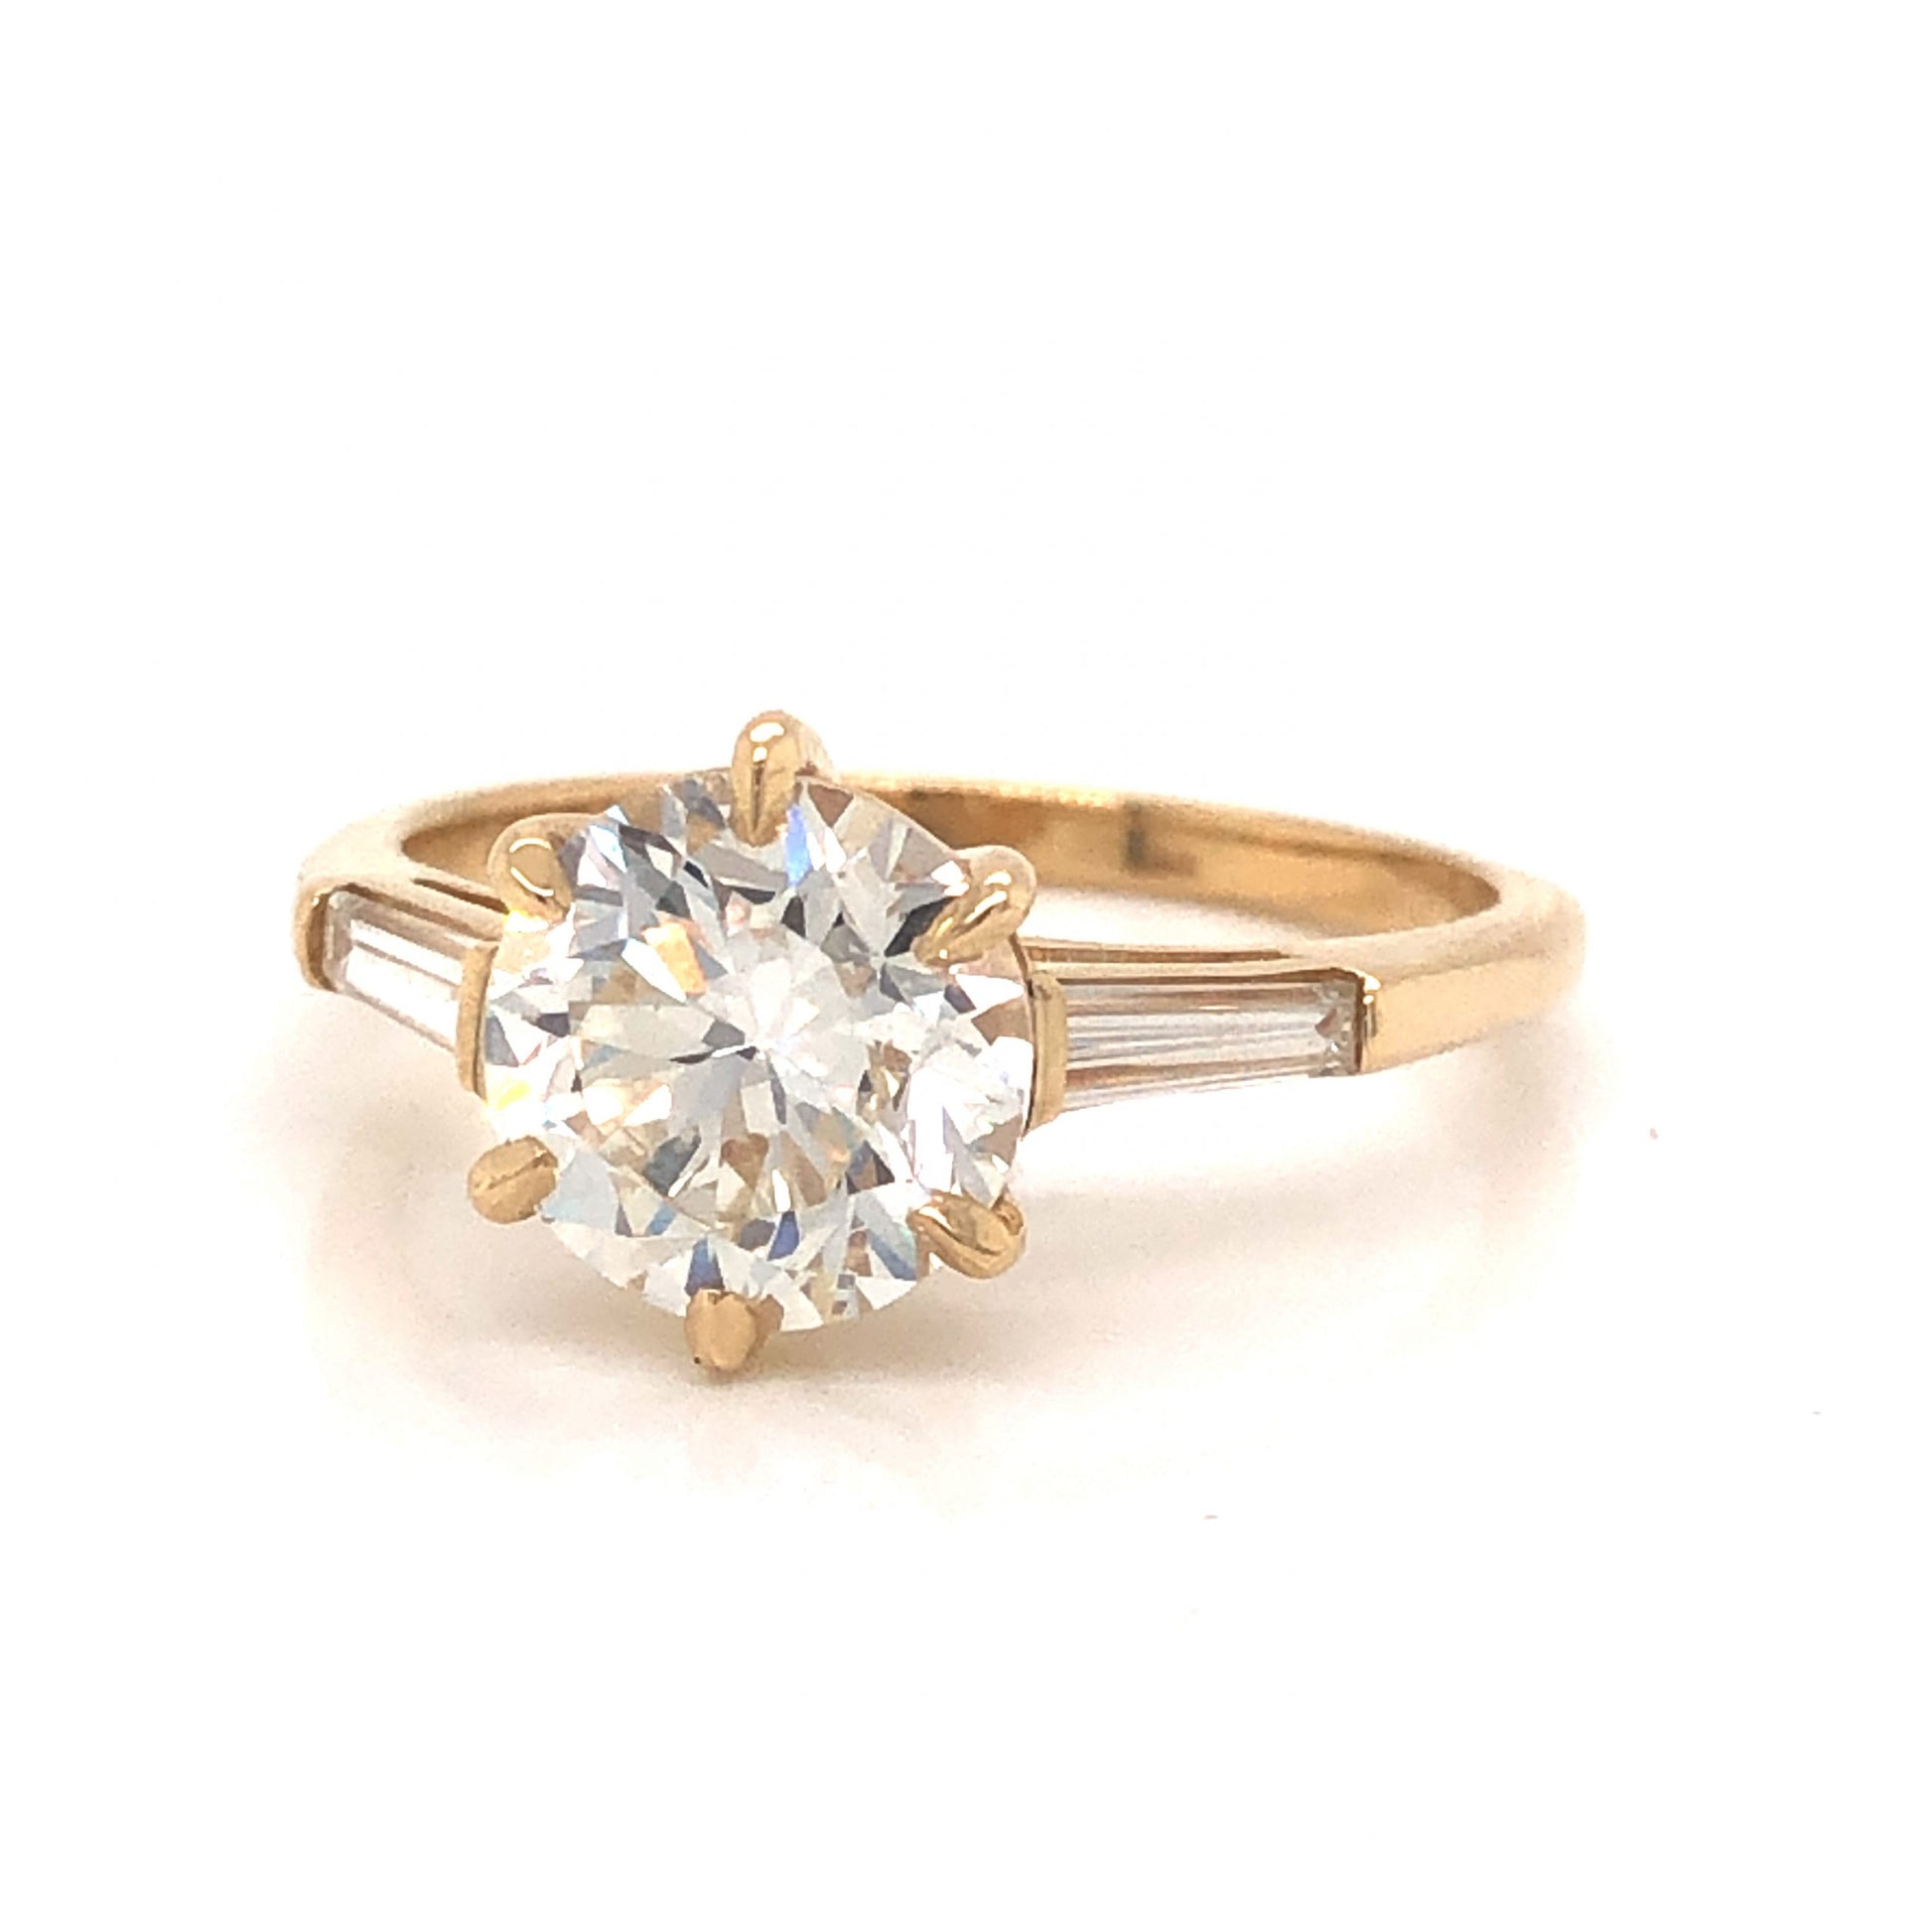 1.86 Old European Cut Diamond Engagement Ring in 14k Yellow Gold